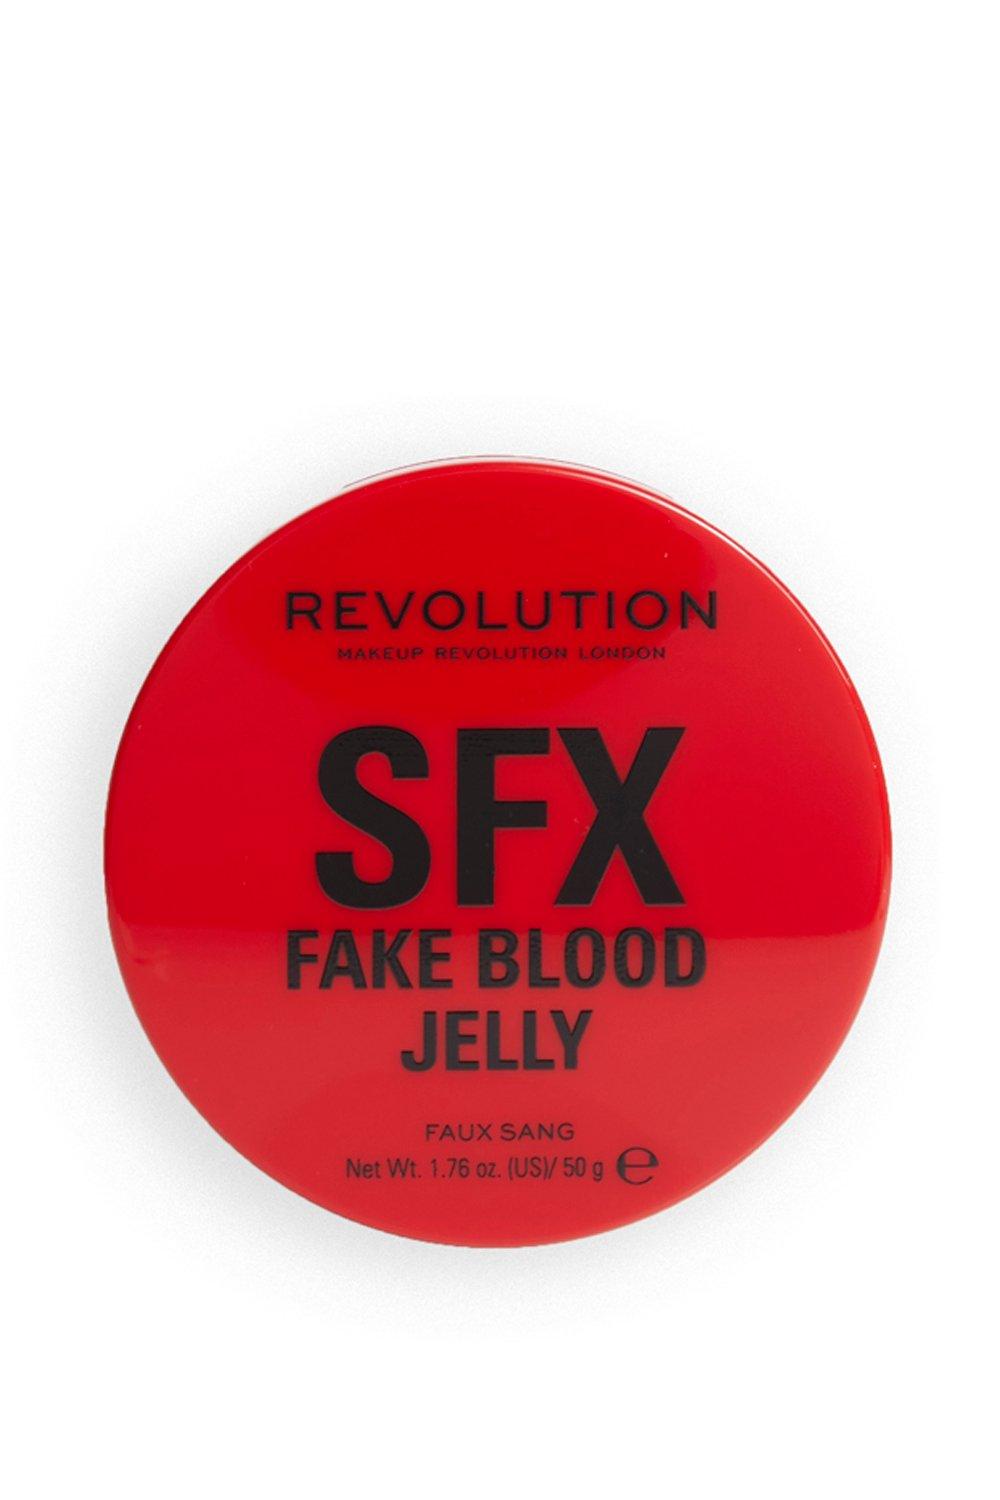 Makeup Revolution Creator SFX Fake Blood